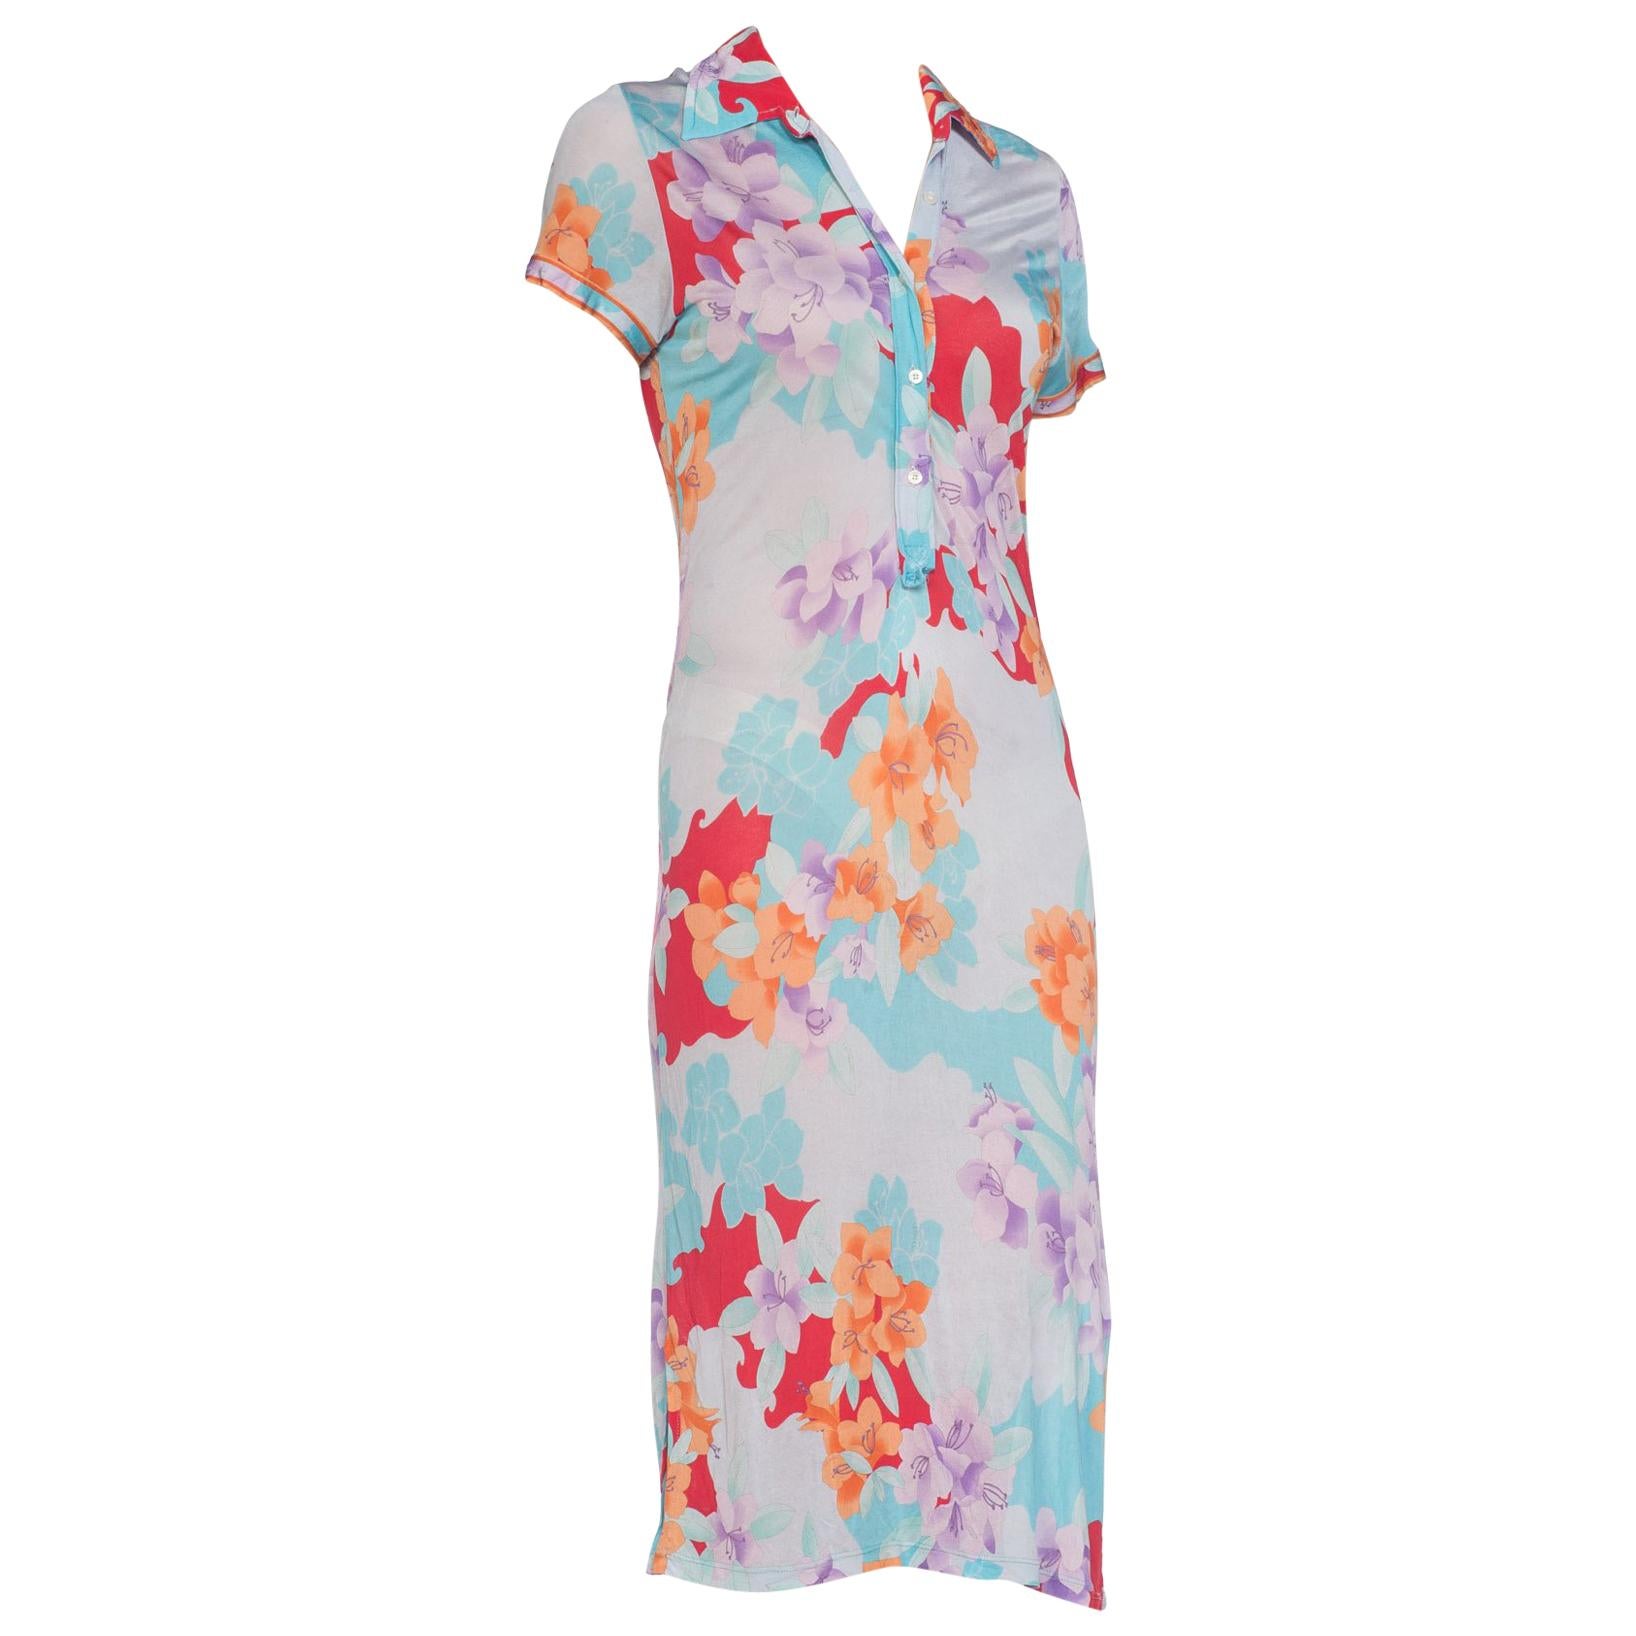 1980S LEONARD Pastel Sheer Rayon Blend Jersey Tropical Floral Print Dress